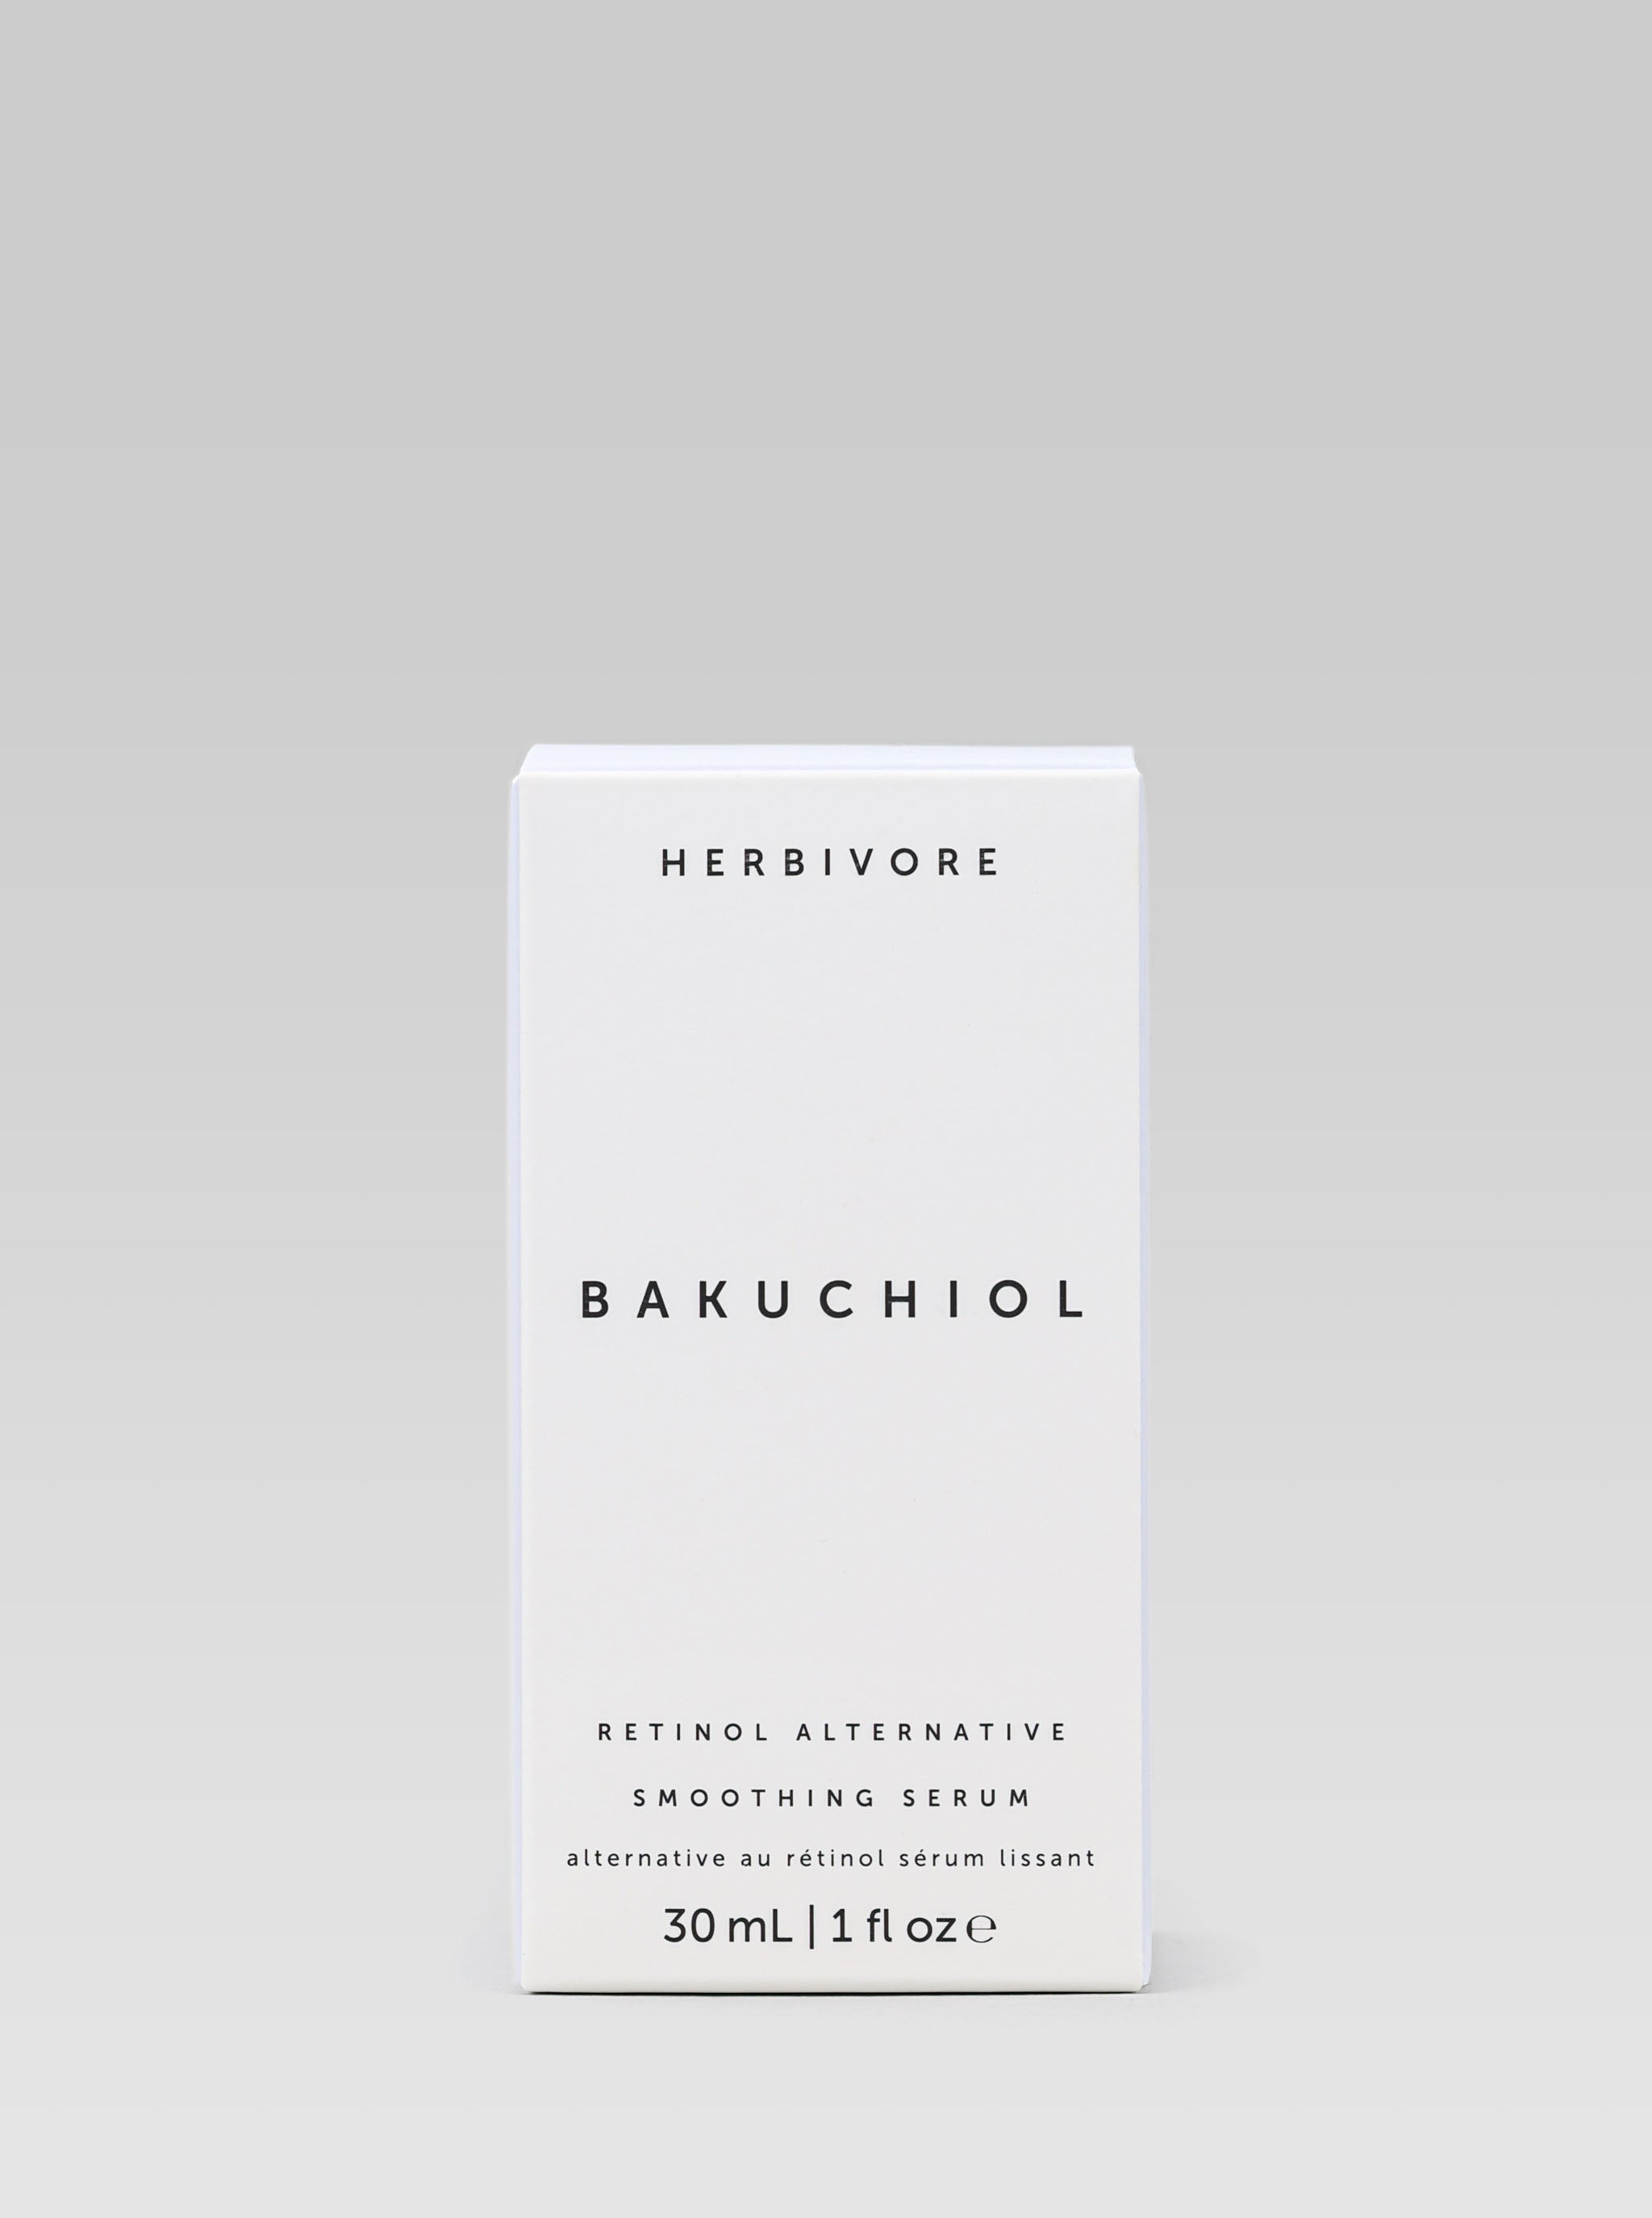 HERBIVORE BOTANICALS Bakuchiol Retinol Alternative Smoothing Serum Product Packaging